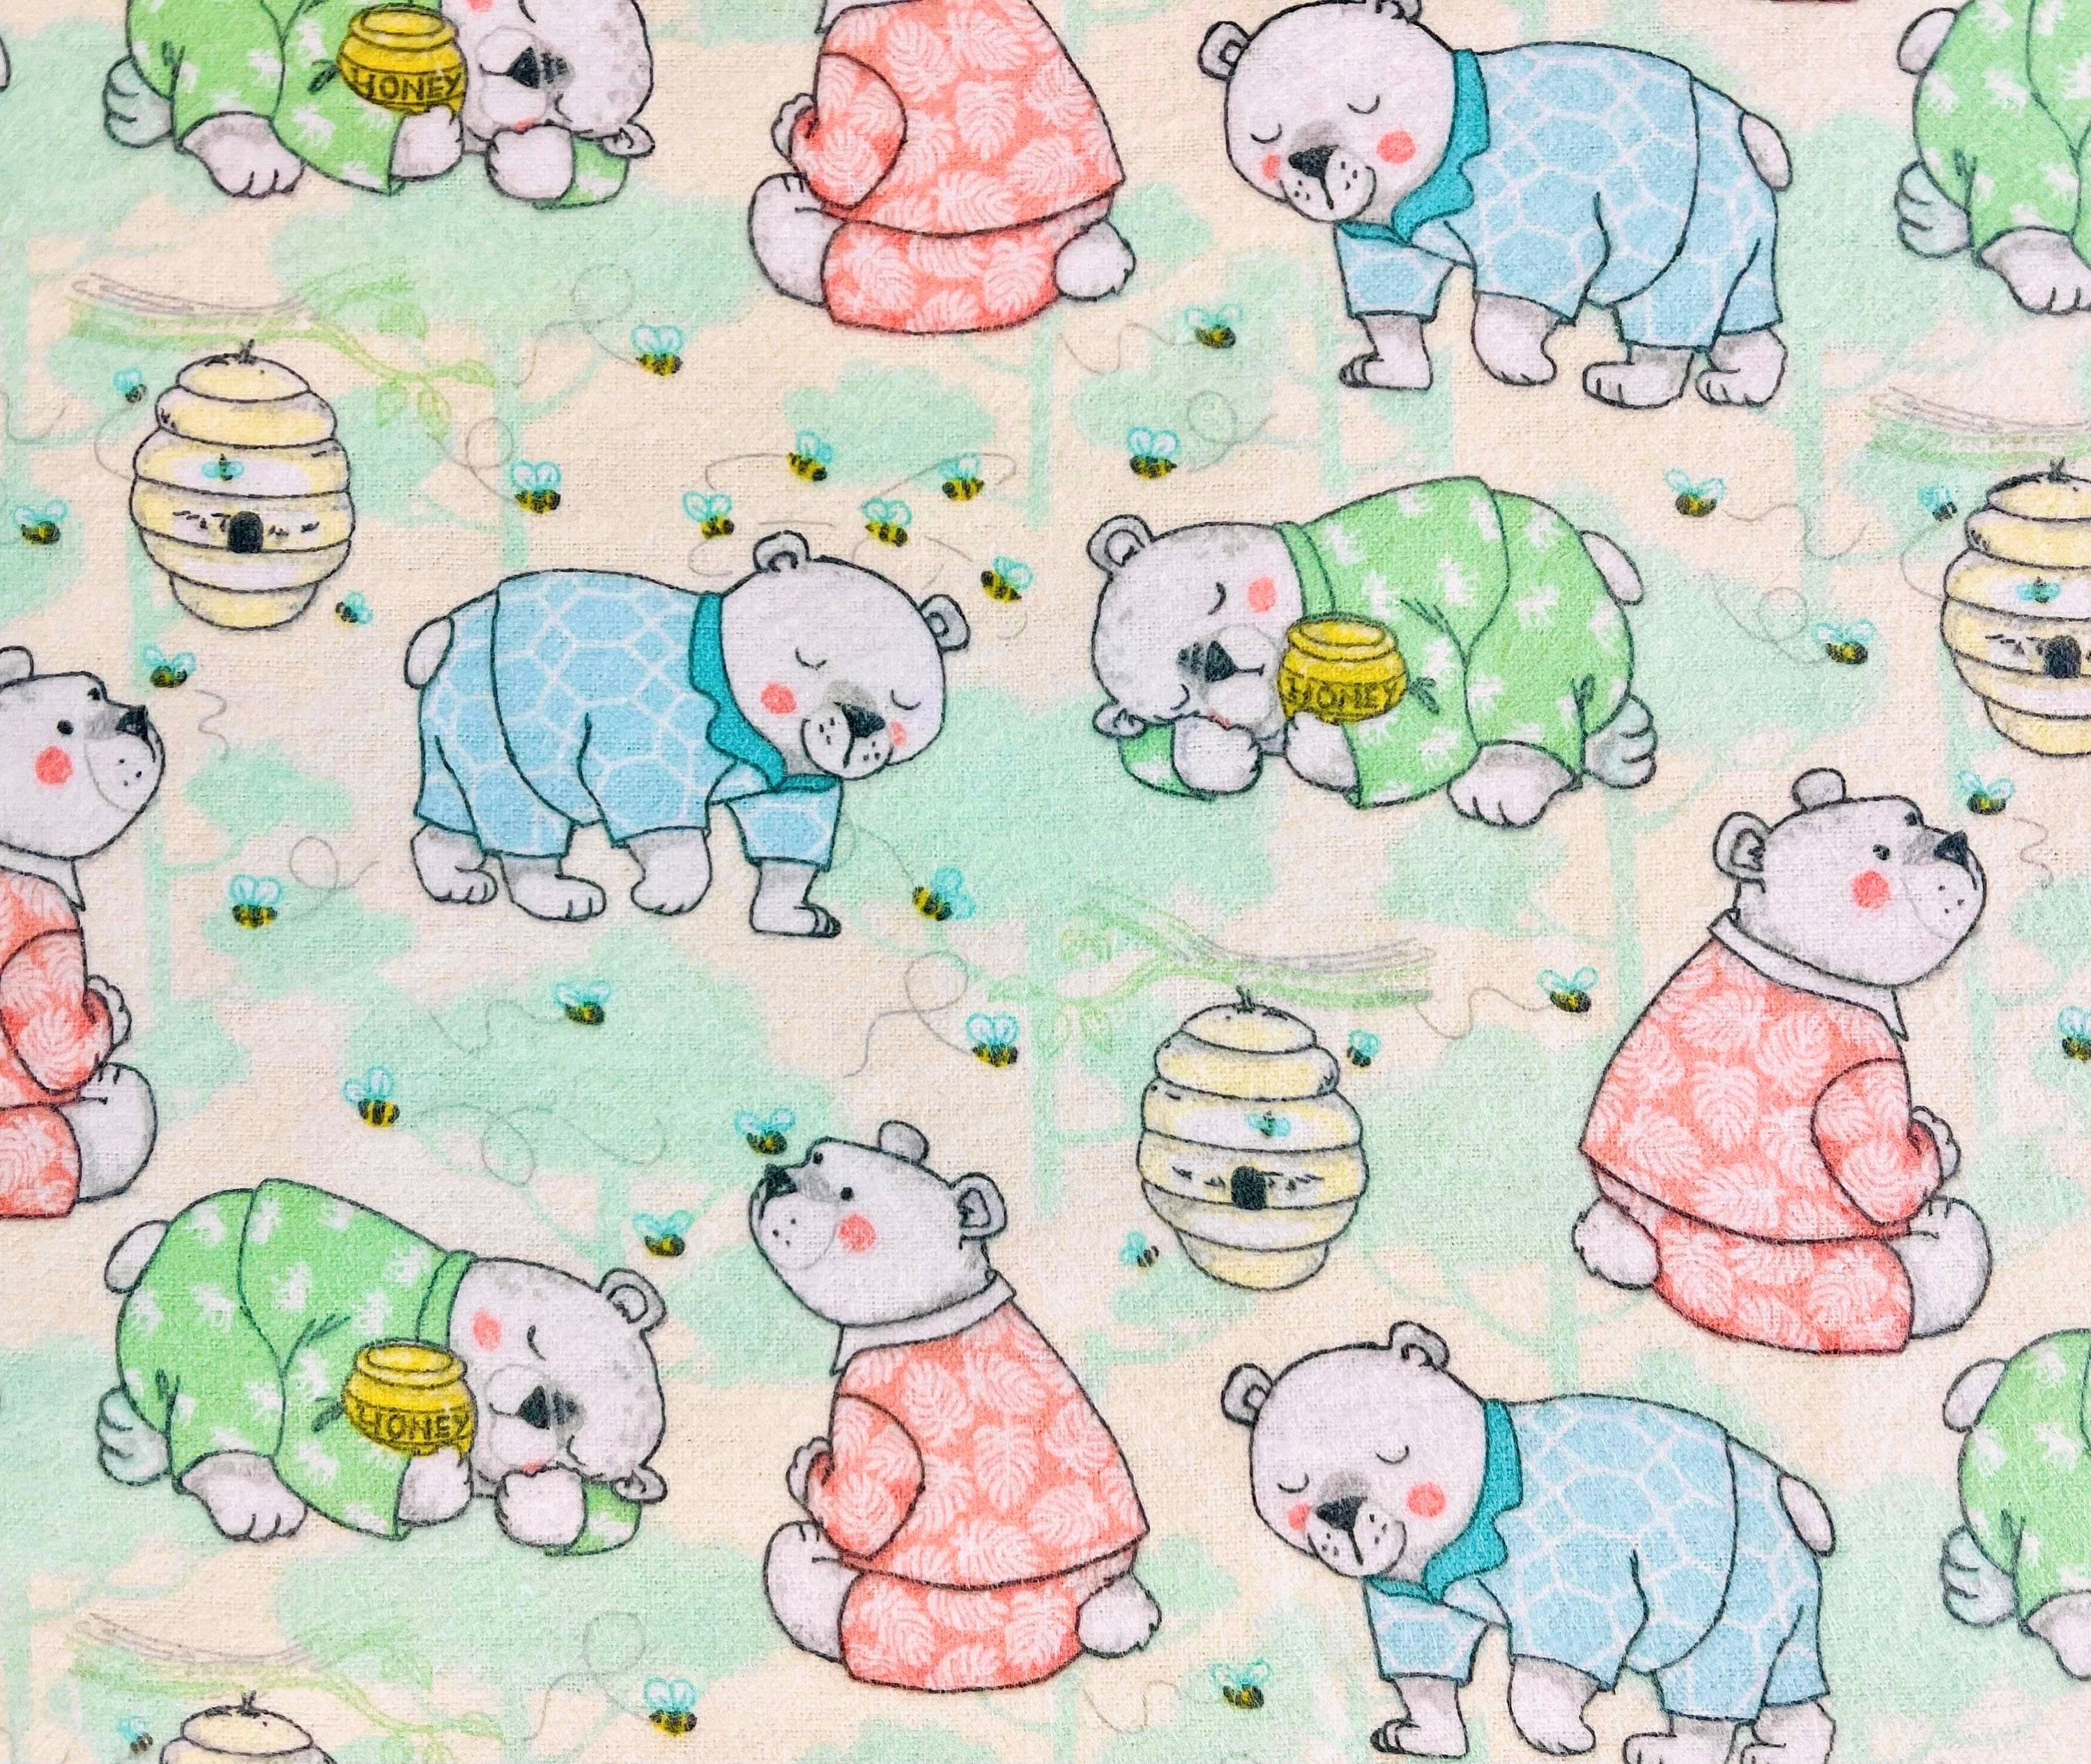 Sleepy Bears Flannel Fabric by the Yard or Half Yards 100% Cotton